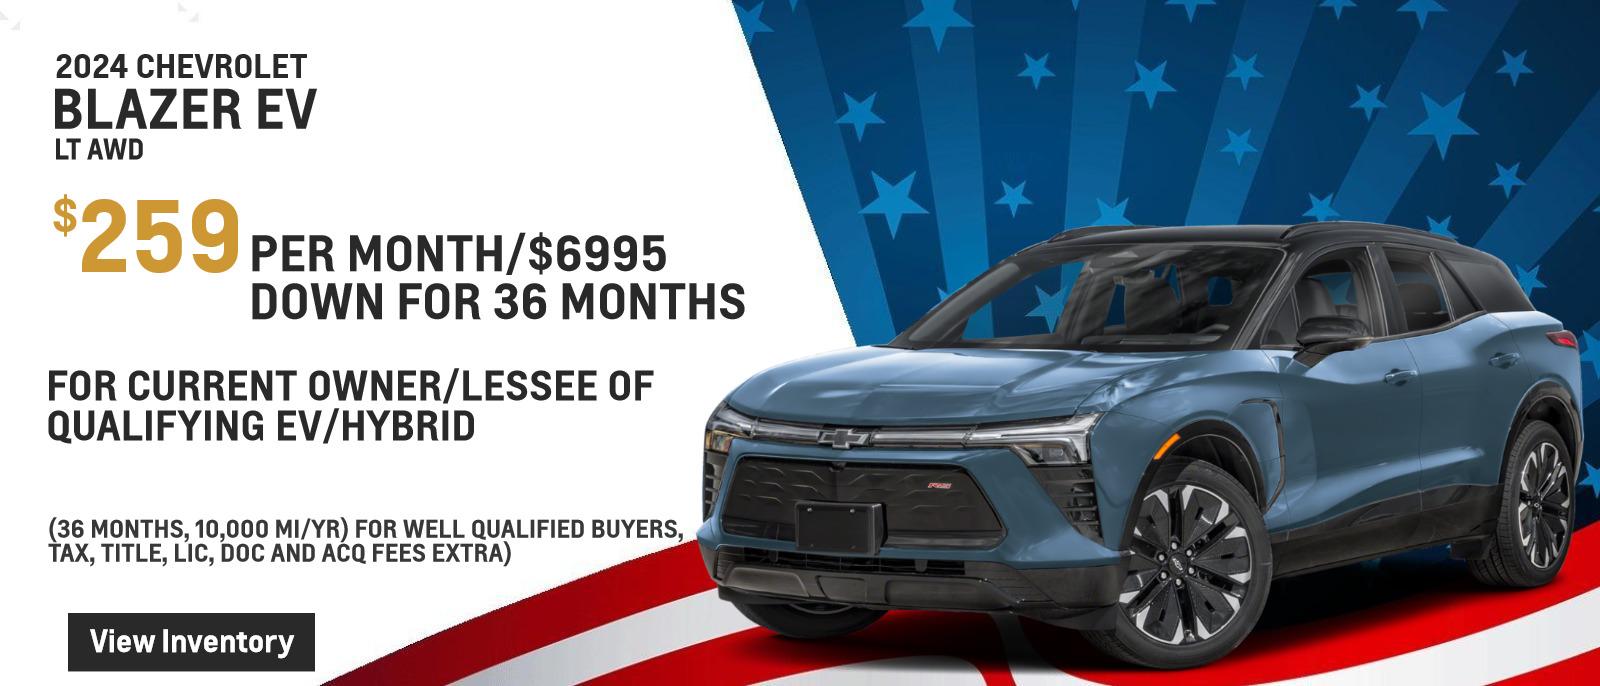 $6995 down/259 per month 36 month LT AWD Blazer EV
for current owner/lessee of qualifying EV/hybrid